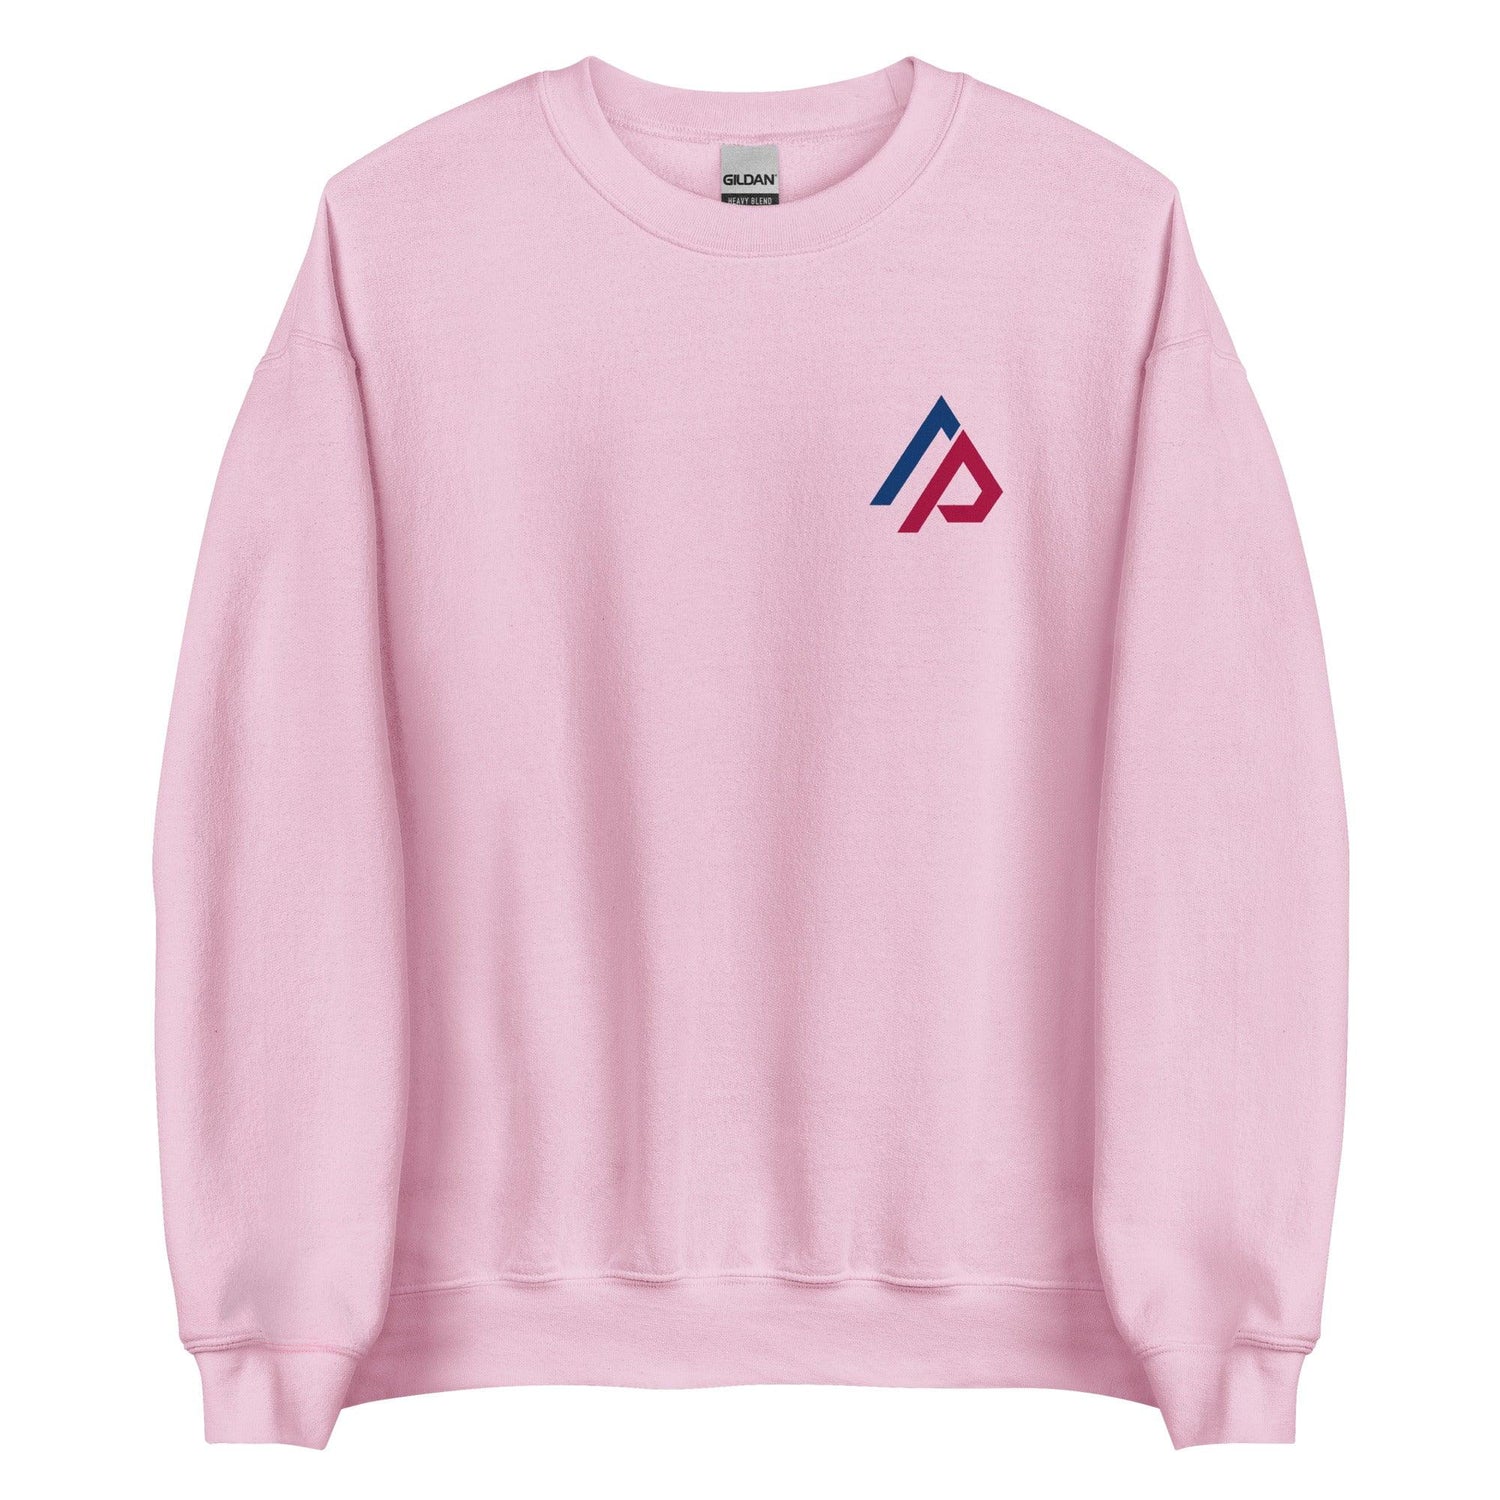 Anderson Paulino "Essential" Sweatshirt - Fan Arch